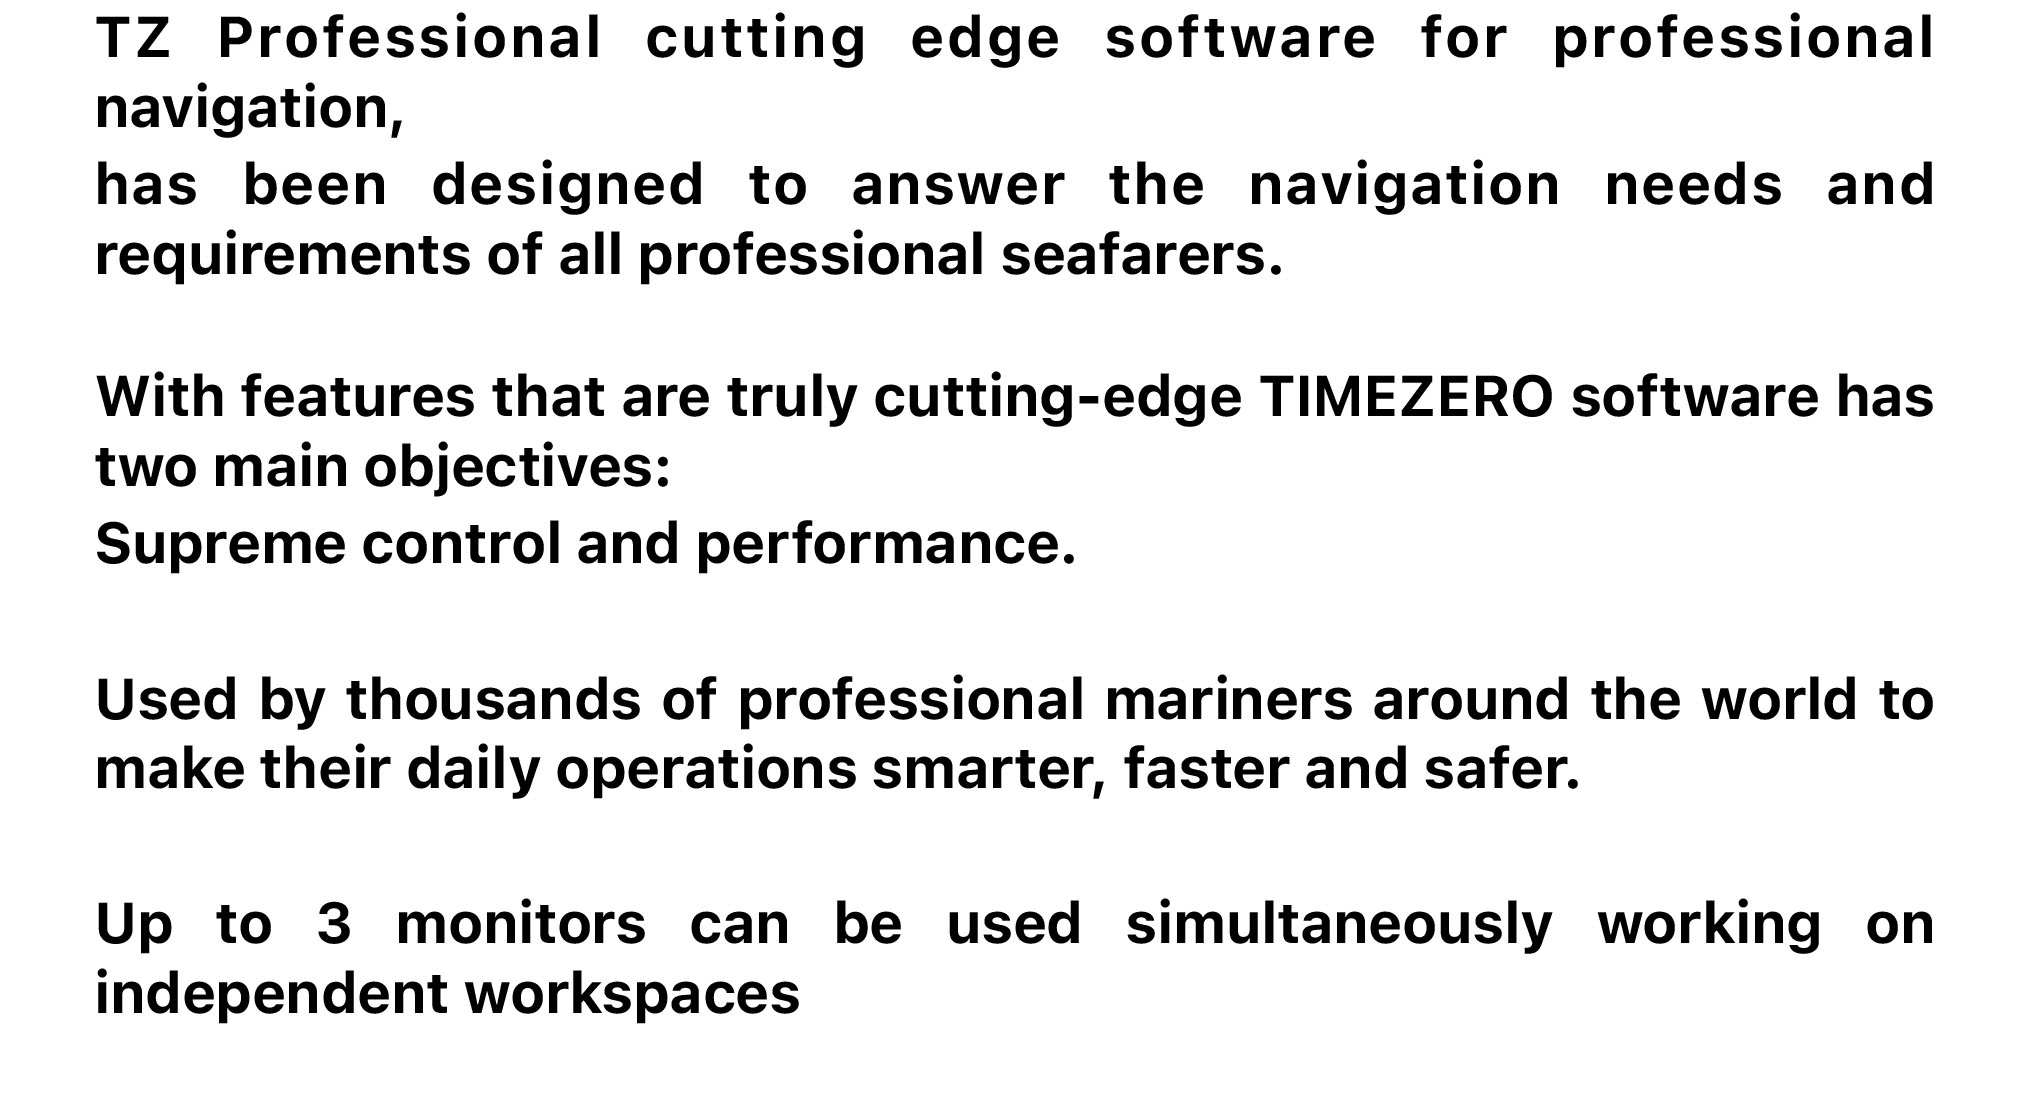 Timezero Professional v4.0 Navigation Software